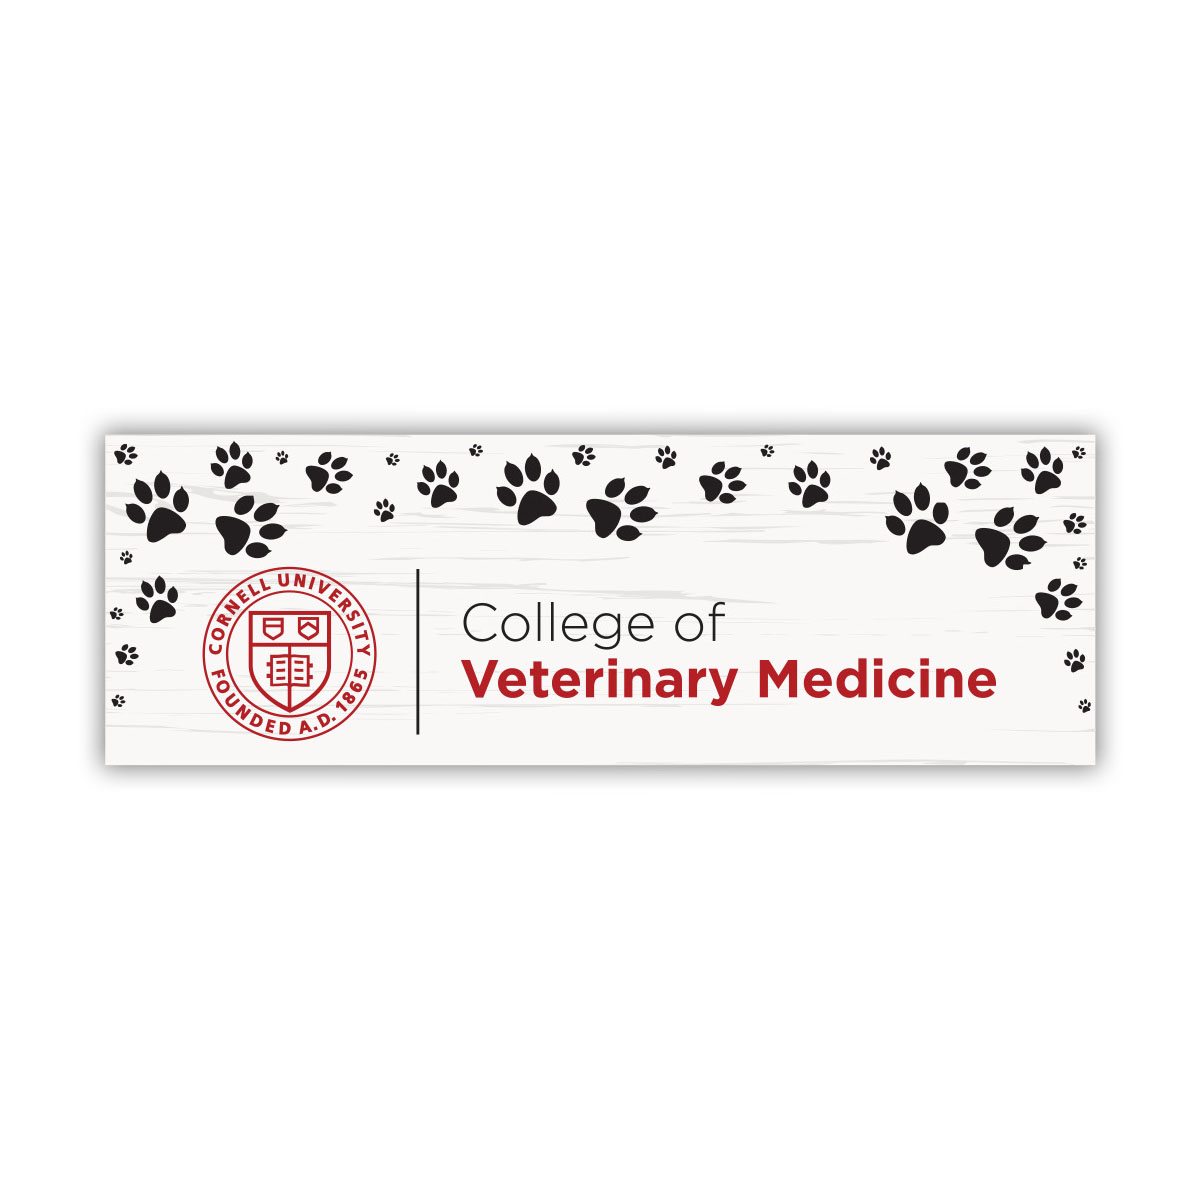 College of Veterinary Medicine Recy